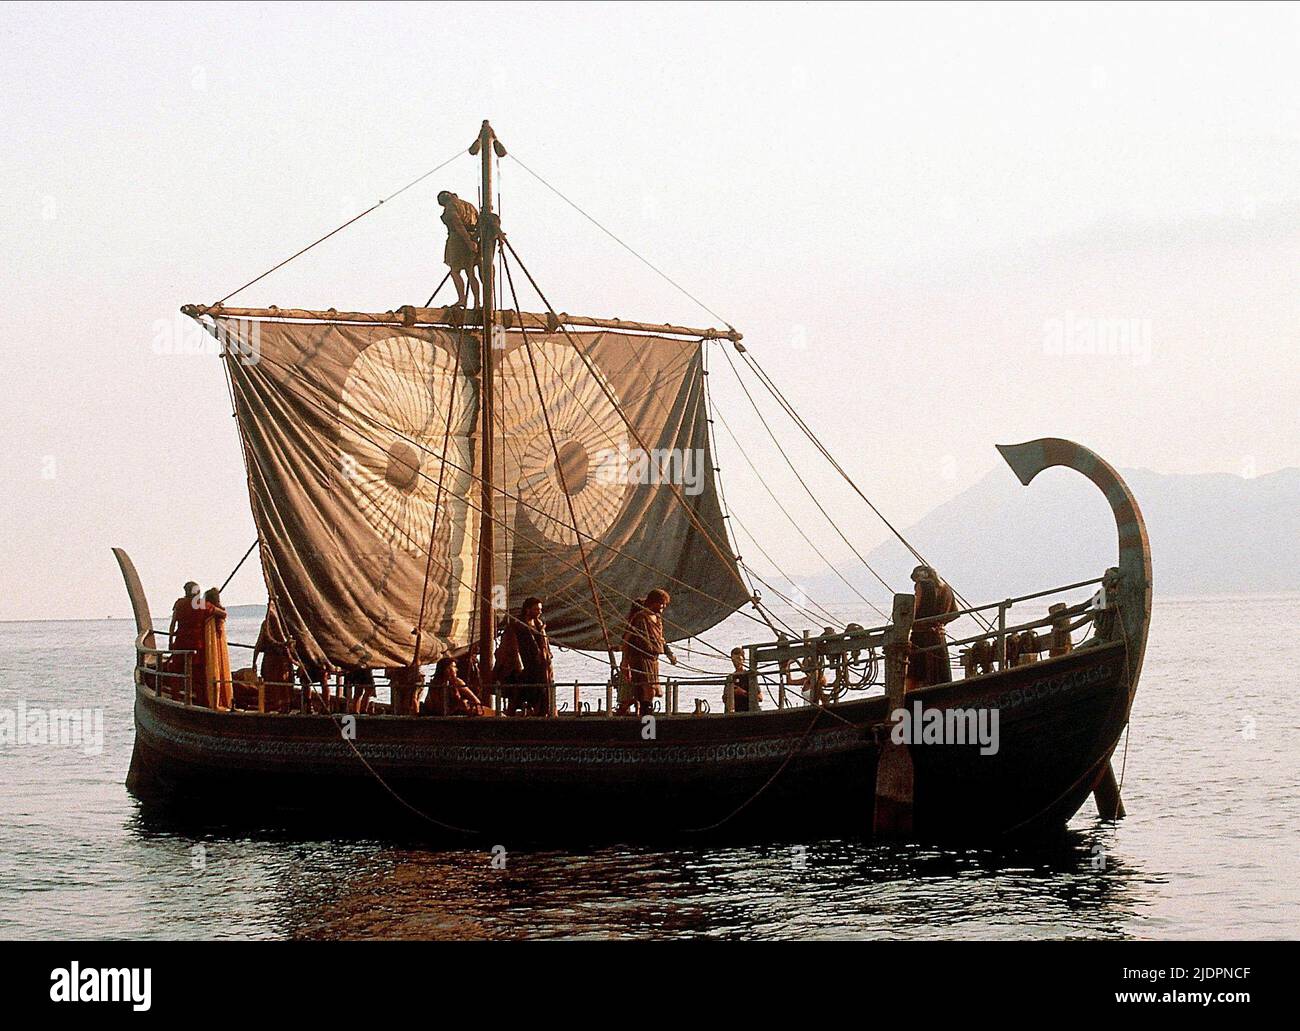 THE ARGONAUTS SHIP, JASON AND THE ARGONAUTS, 2000 Stock Photo